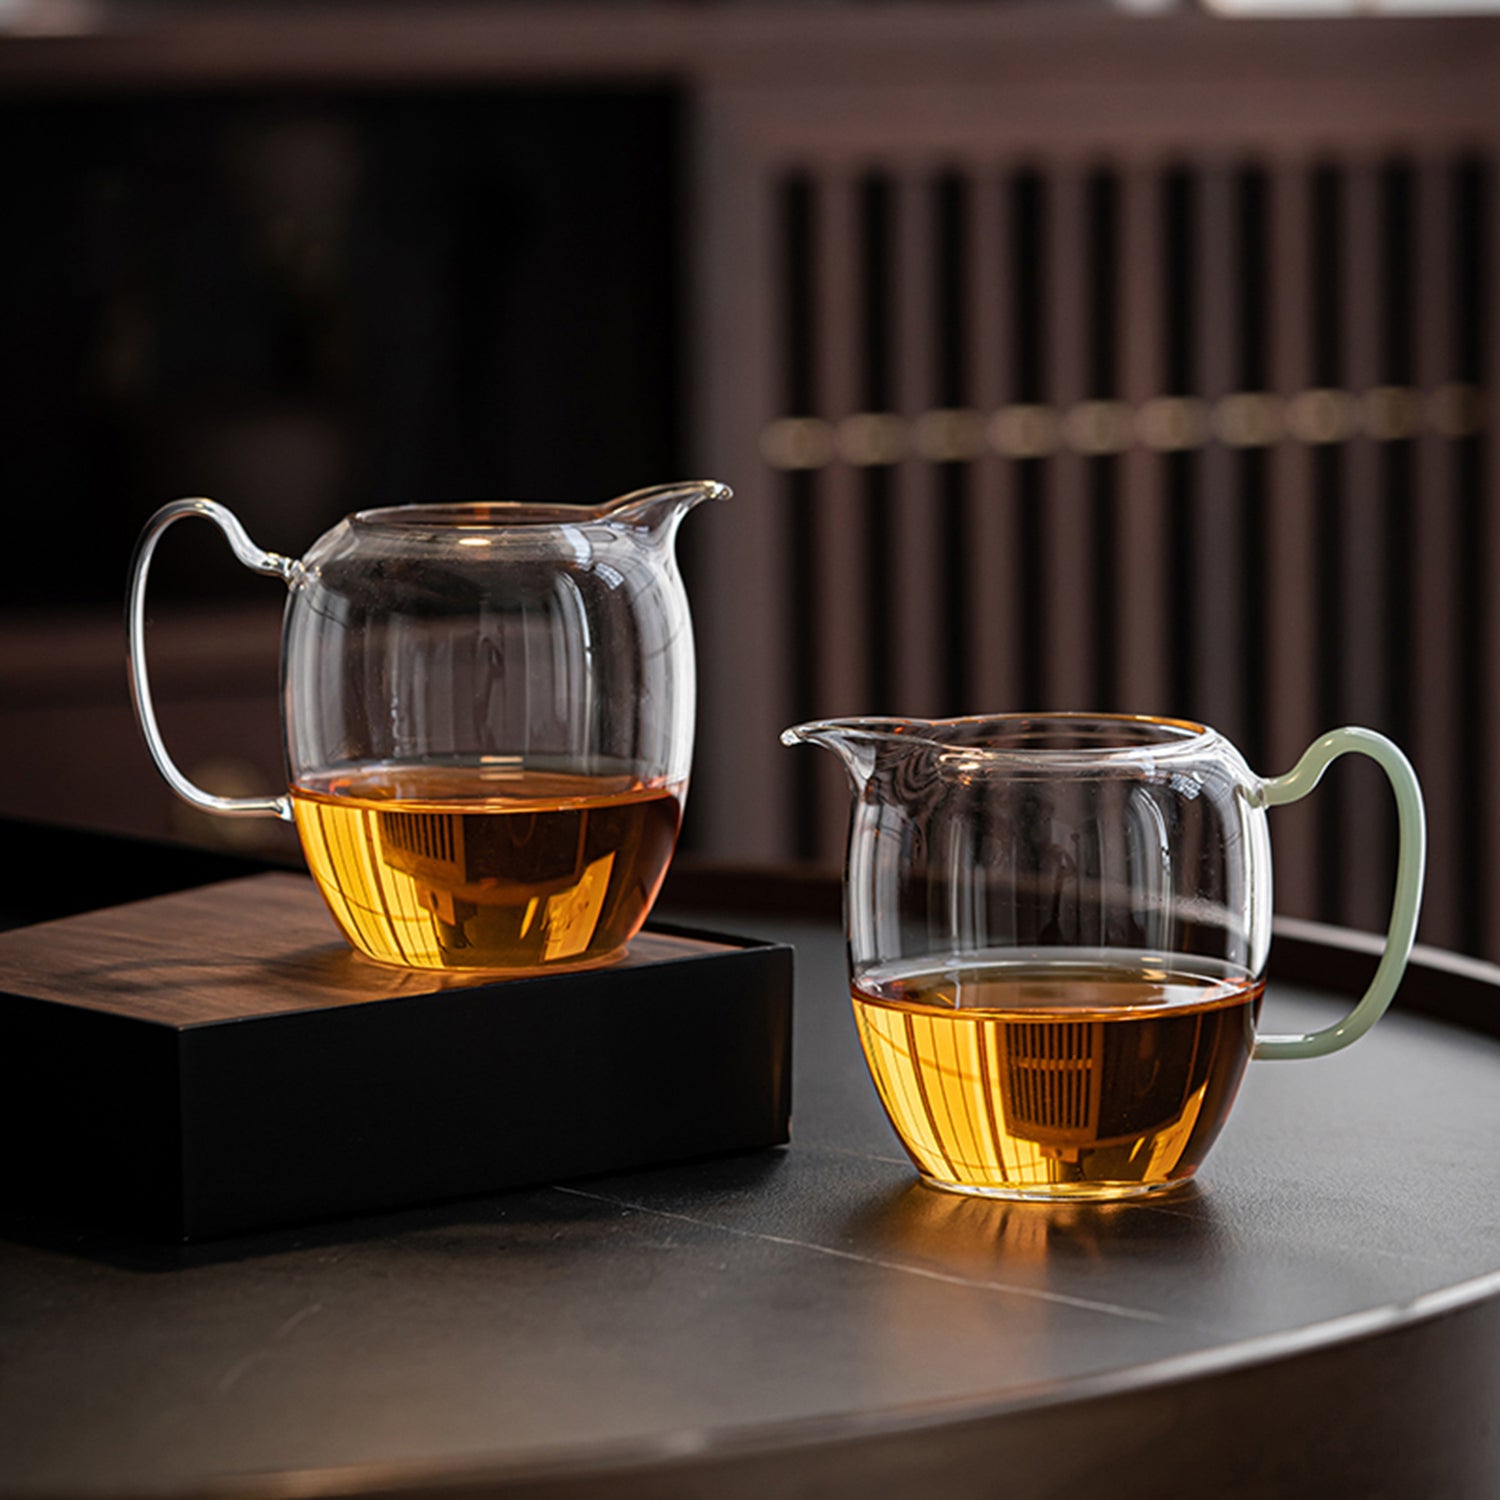 Heat-Resistant Glass Fair Cup Cup with Handle Tea Pot Tea Set Fair Cup Tea Pourer Not Hot